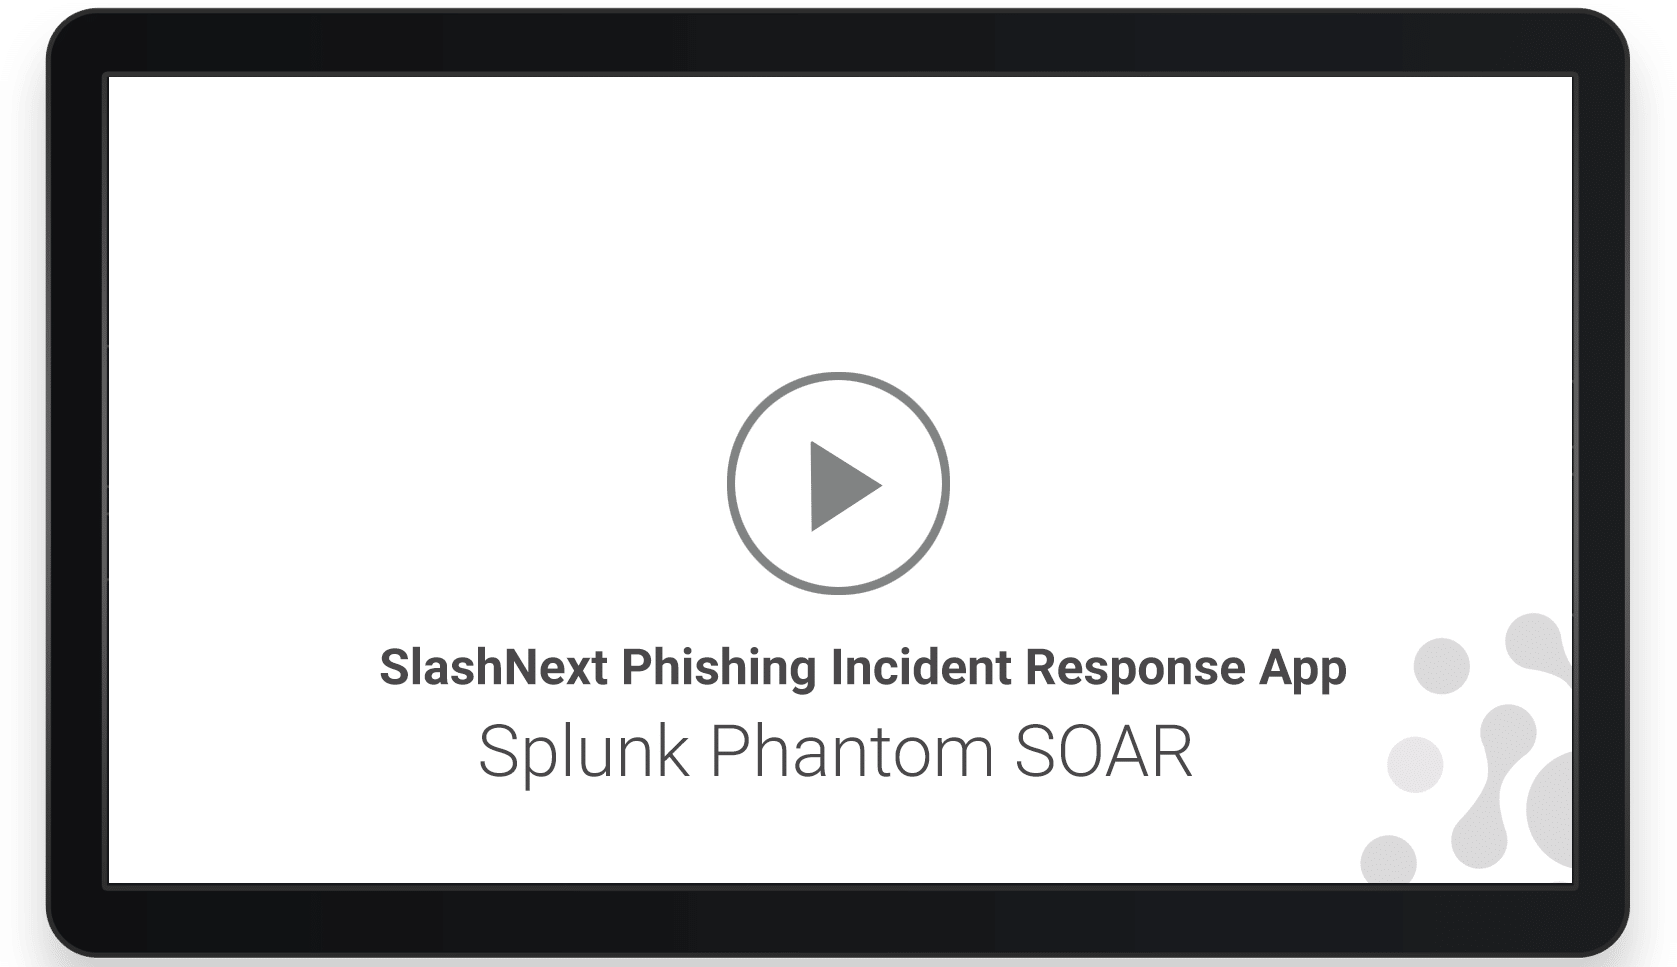 Splunk Phantom SOAR platform